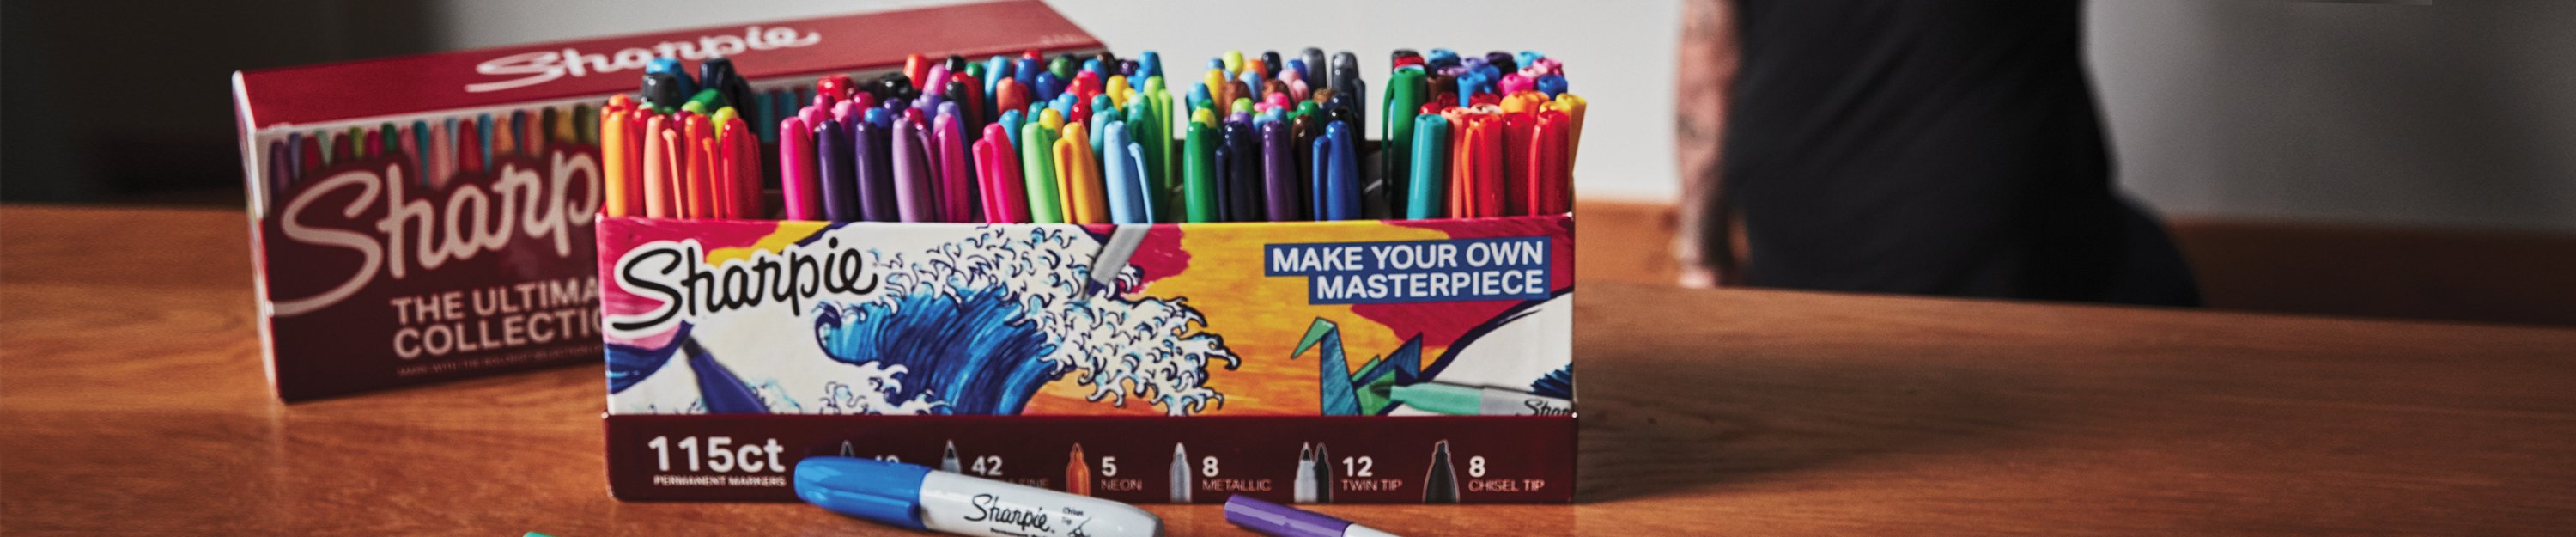 Office School Supplies Bundle Dry Erase Markers Yoobi Pens Sharpie Paint  Pens